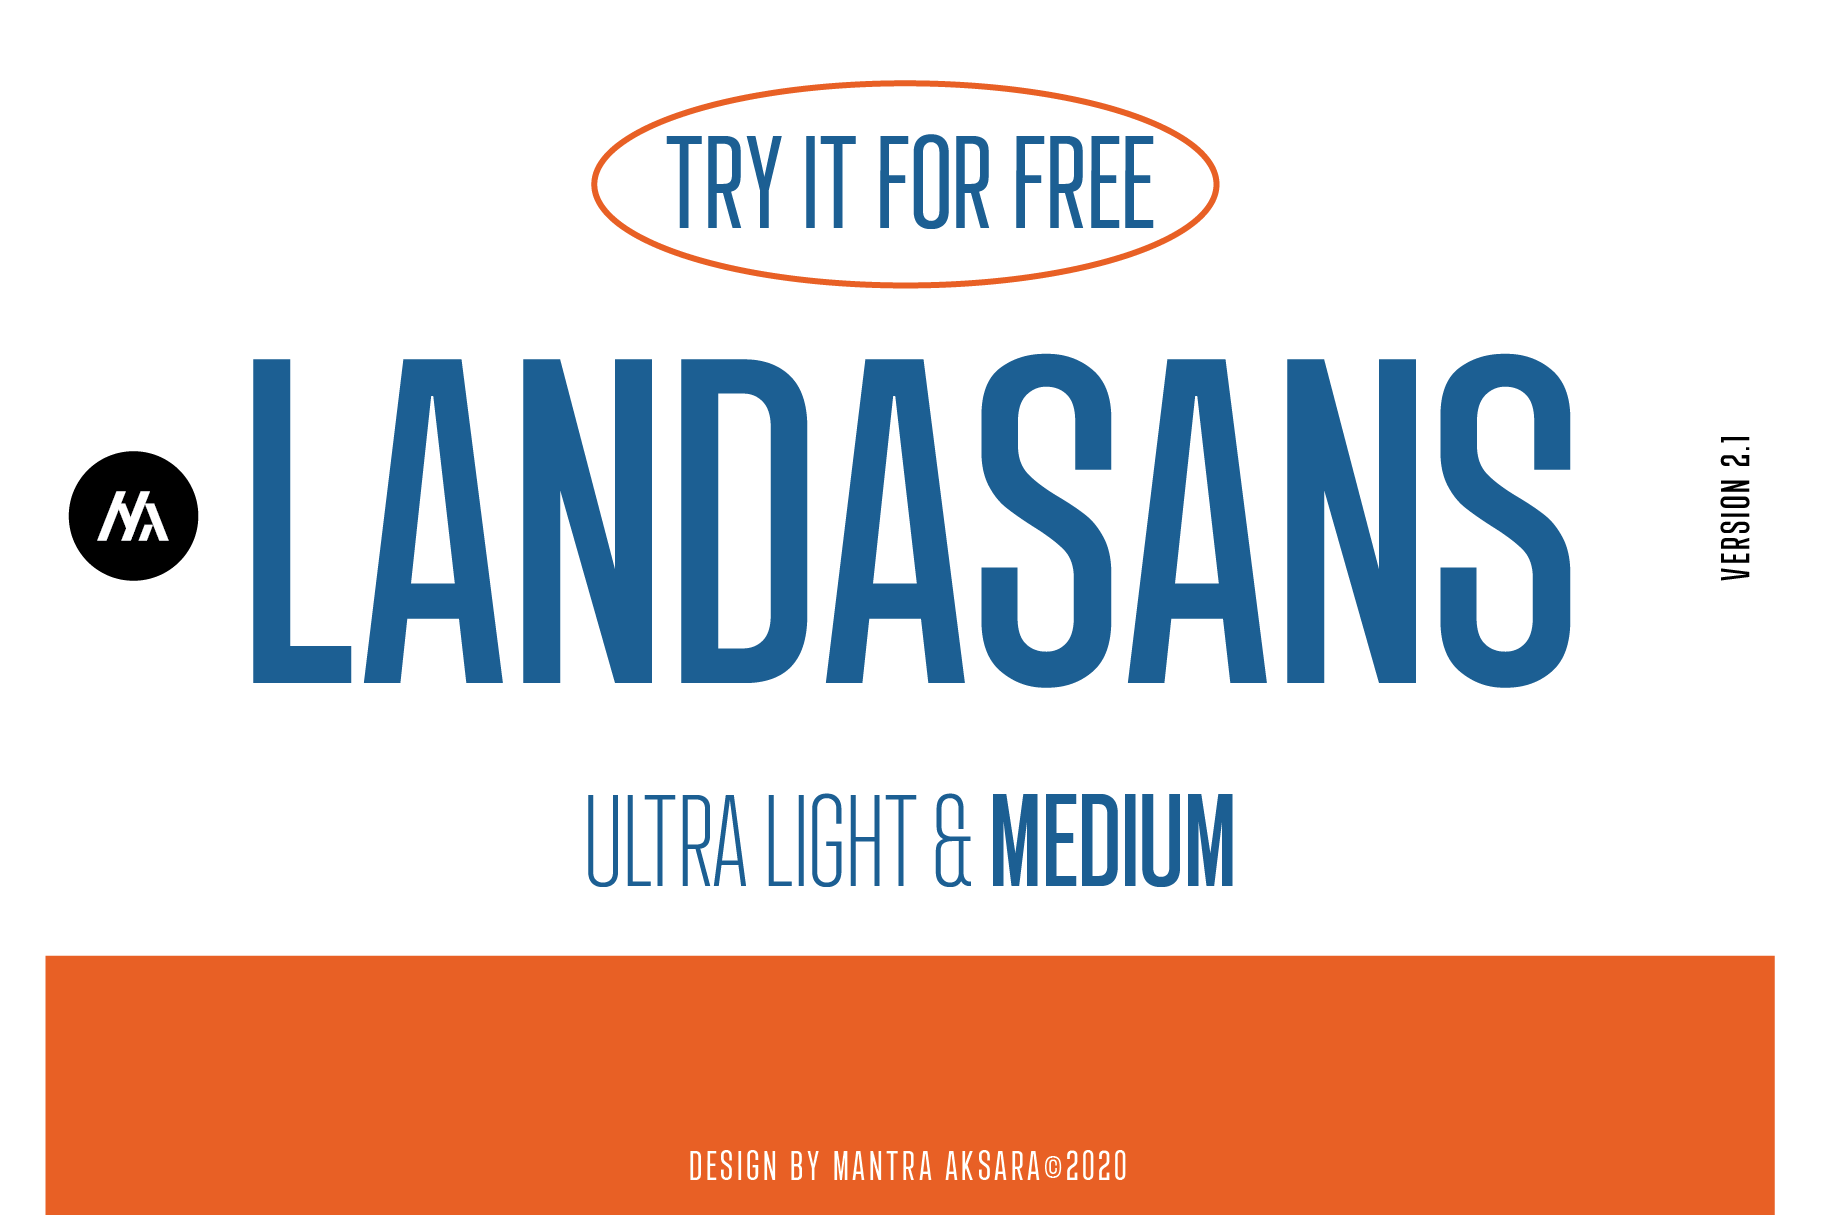 Landasans - Ultra light